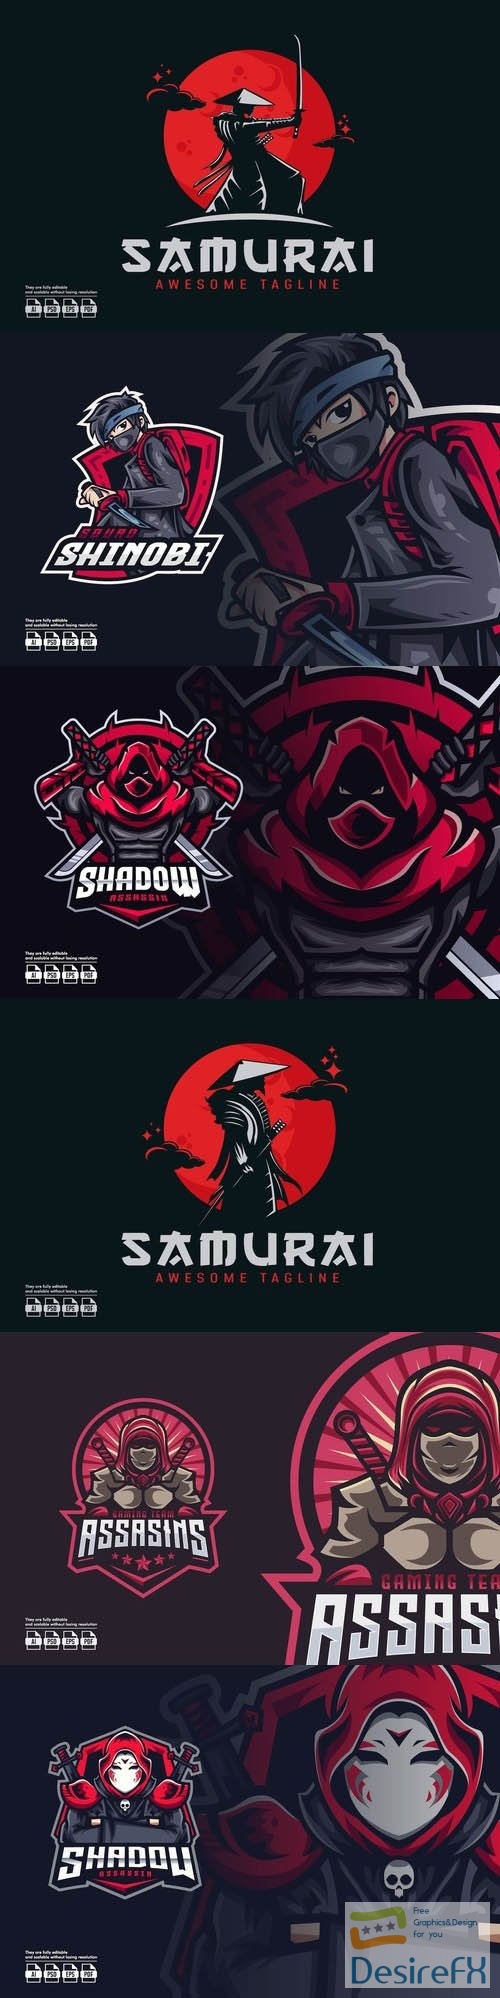 Samurai Ronin Logo Design